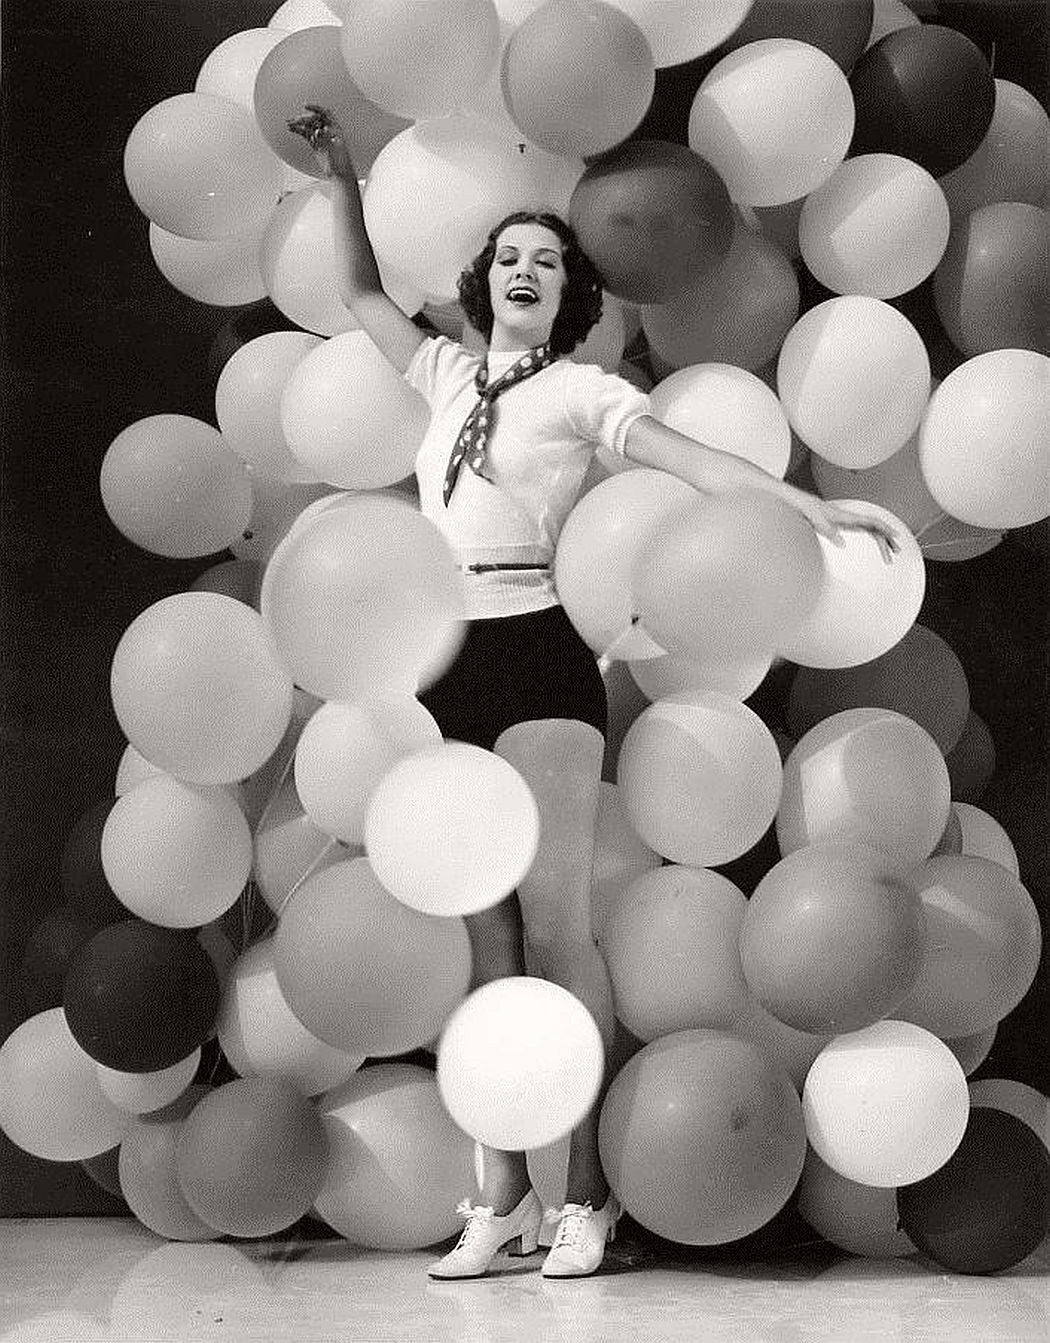 vintage-black-white-portrait-hollywood-movie-actress-1930s-Eleanor-Powell